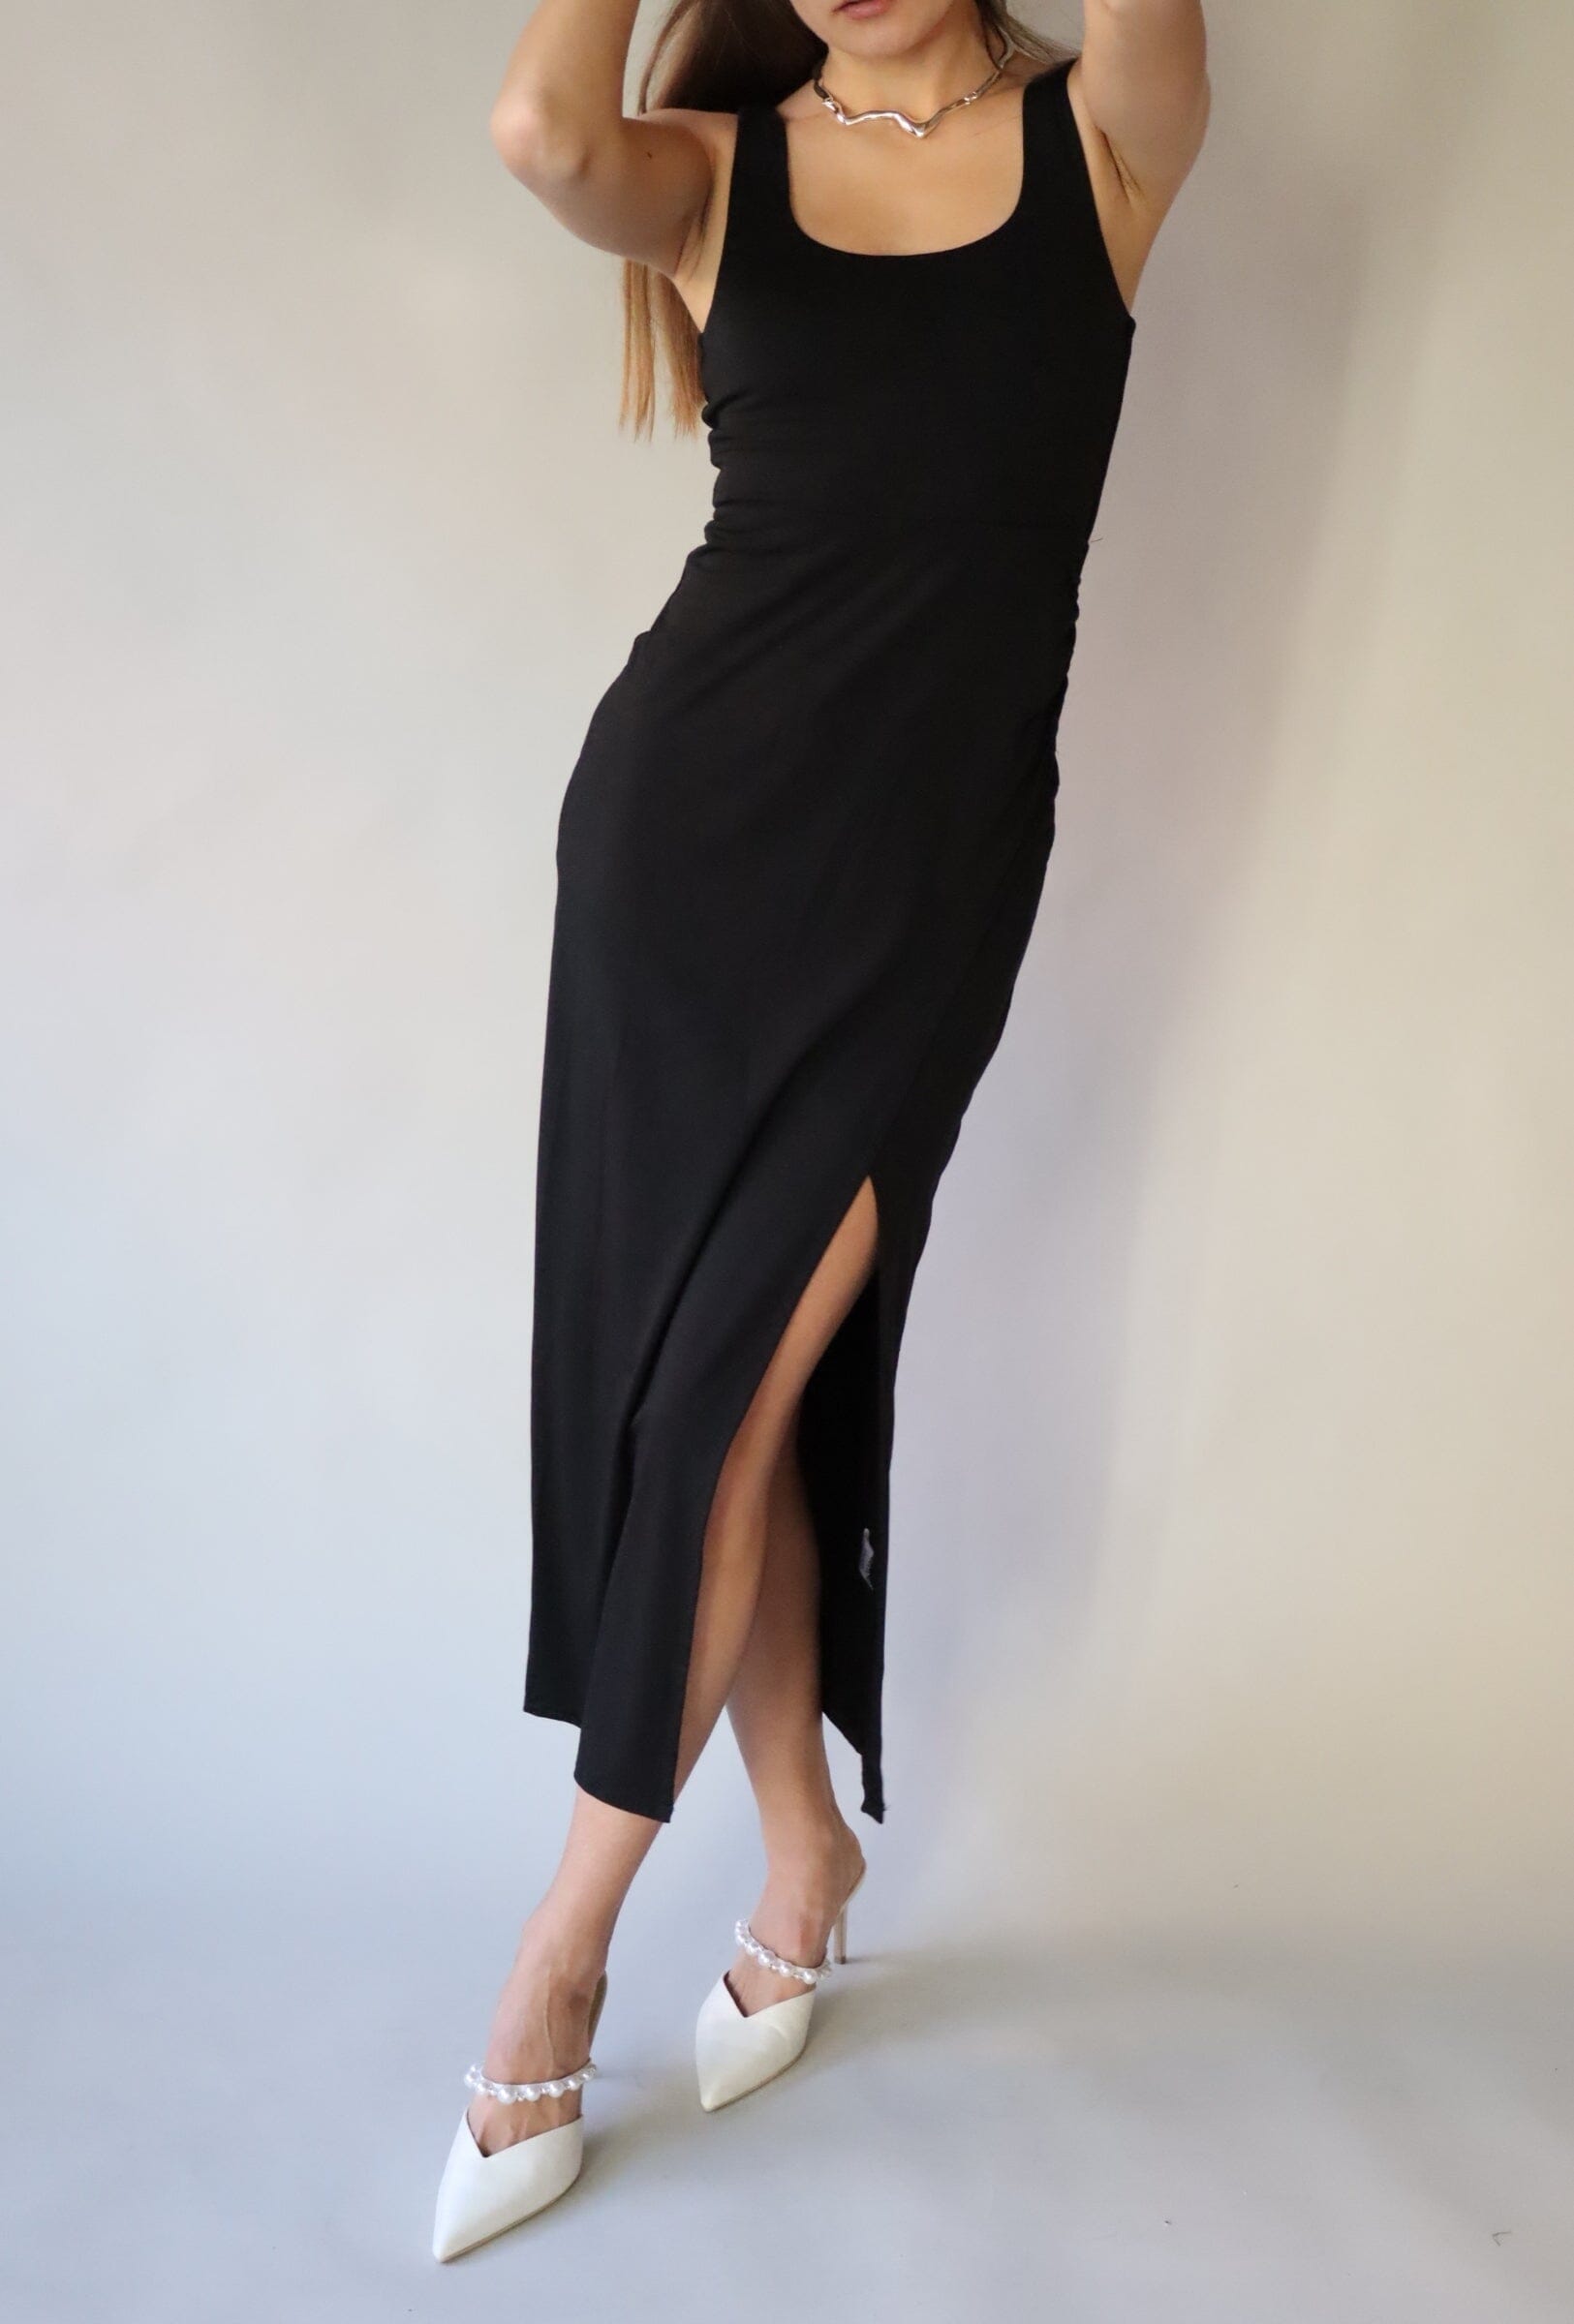 MELBOURNE BLACK DRESS Dress z supply 